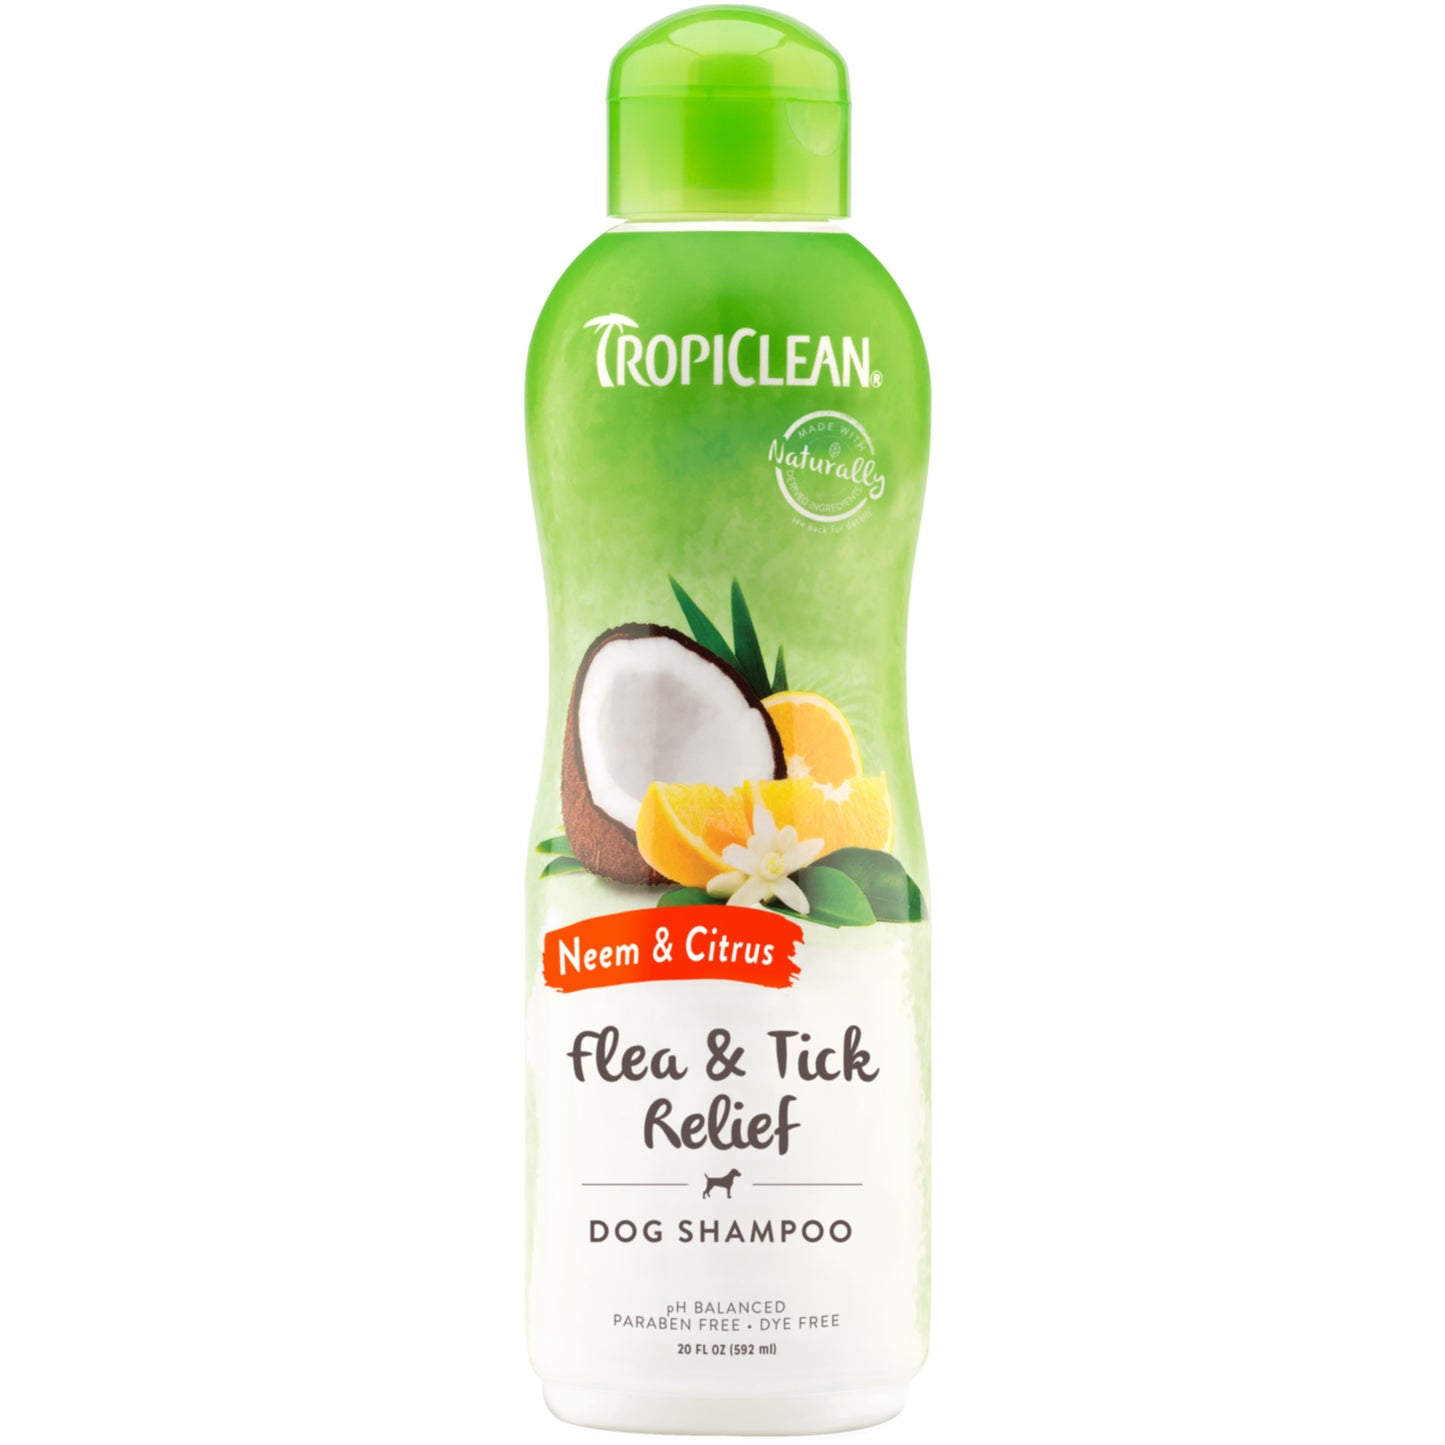 Tropiclean Neem & Citrus Flea & Tick Shampoo